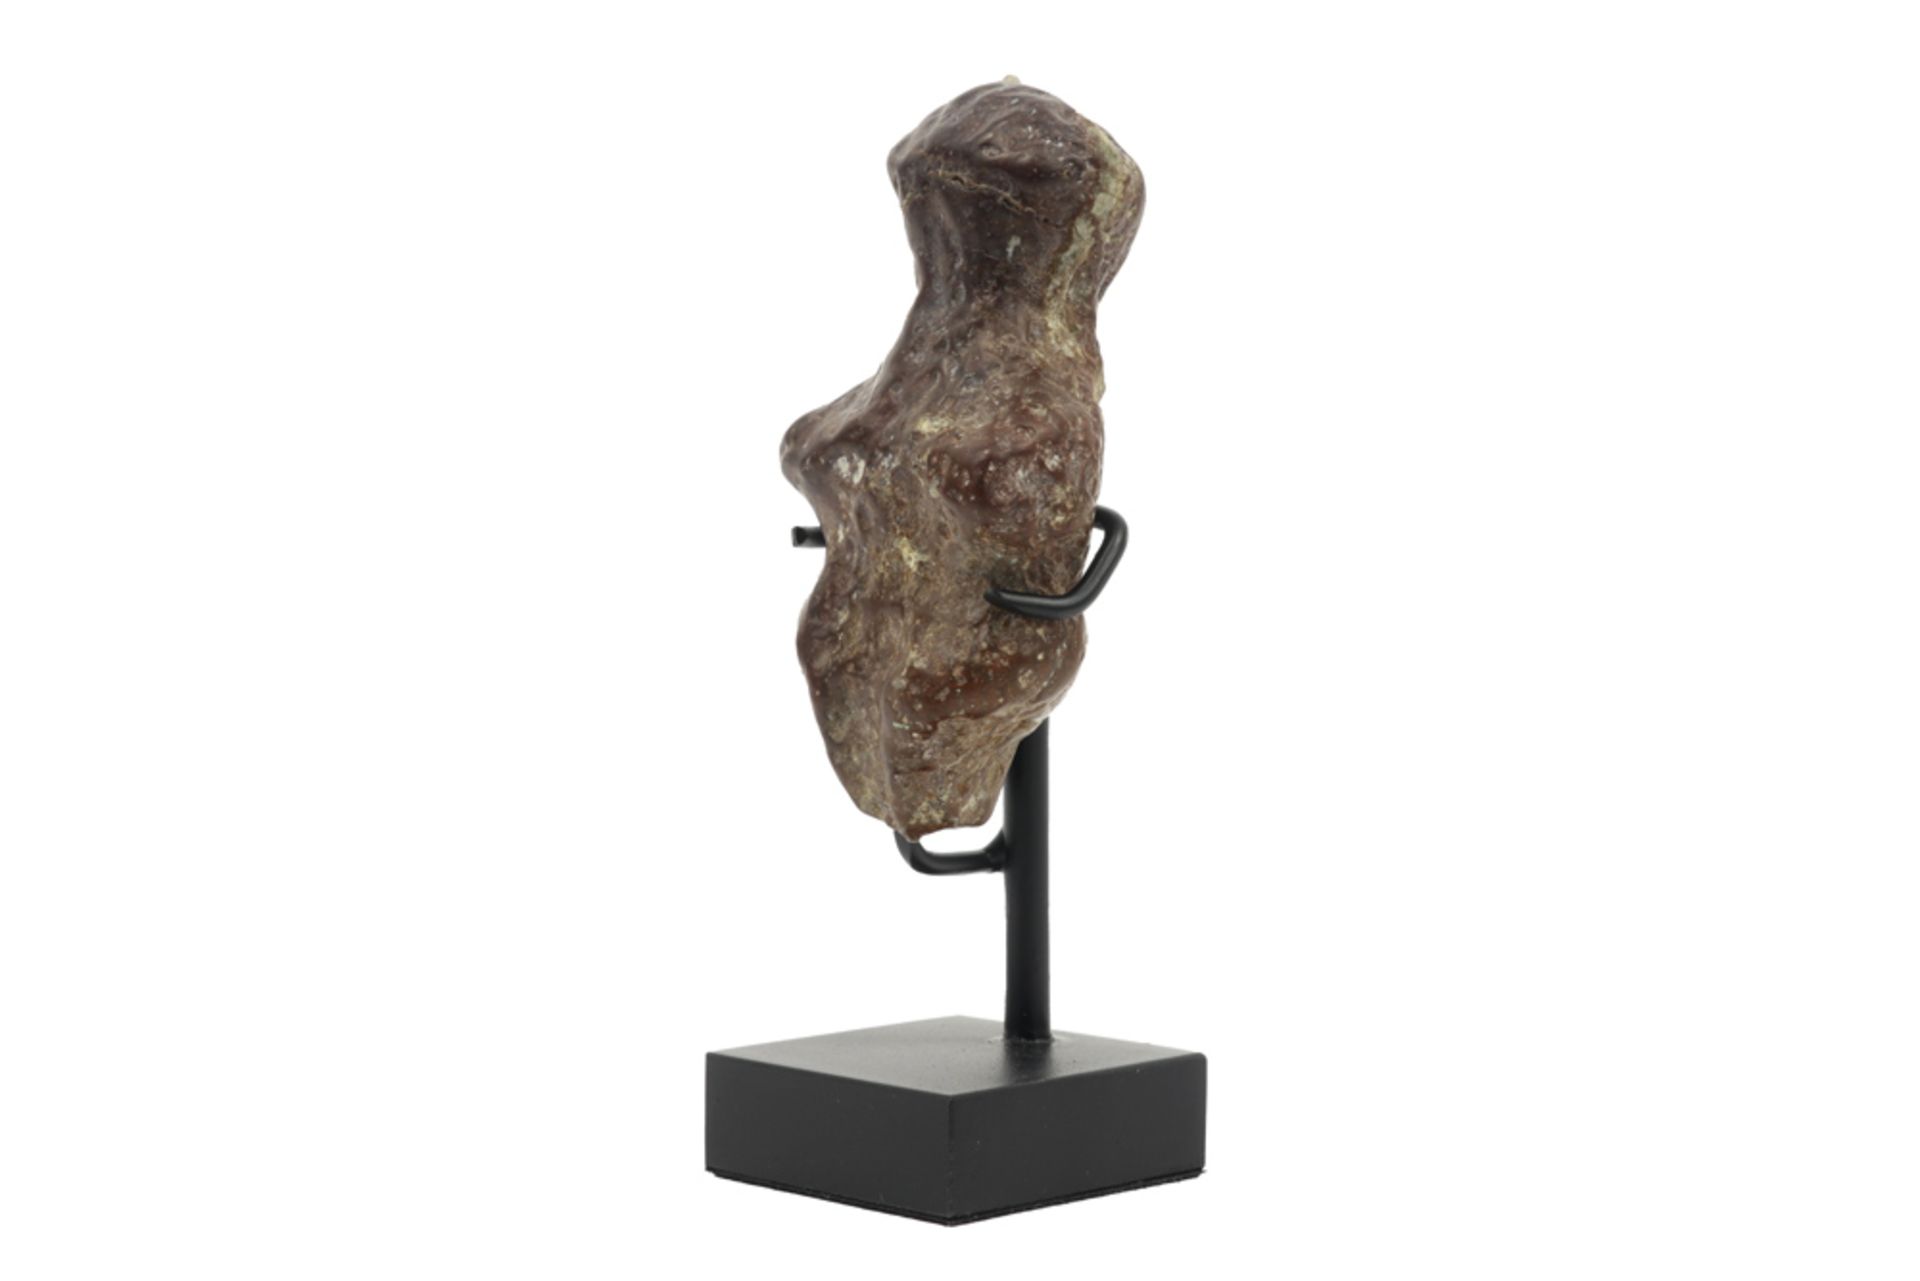 Donau Culture fertilty idol in stone (maybe flint) || DONAU - CULTUUR vrouwelijk - Image 2 of 3